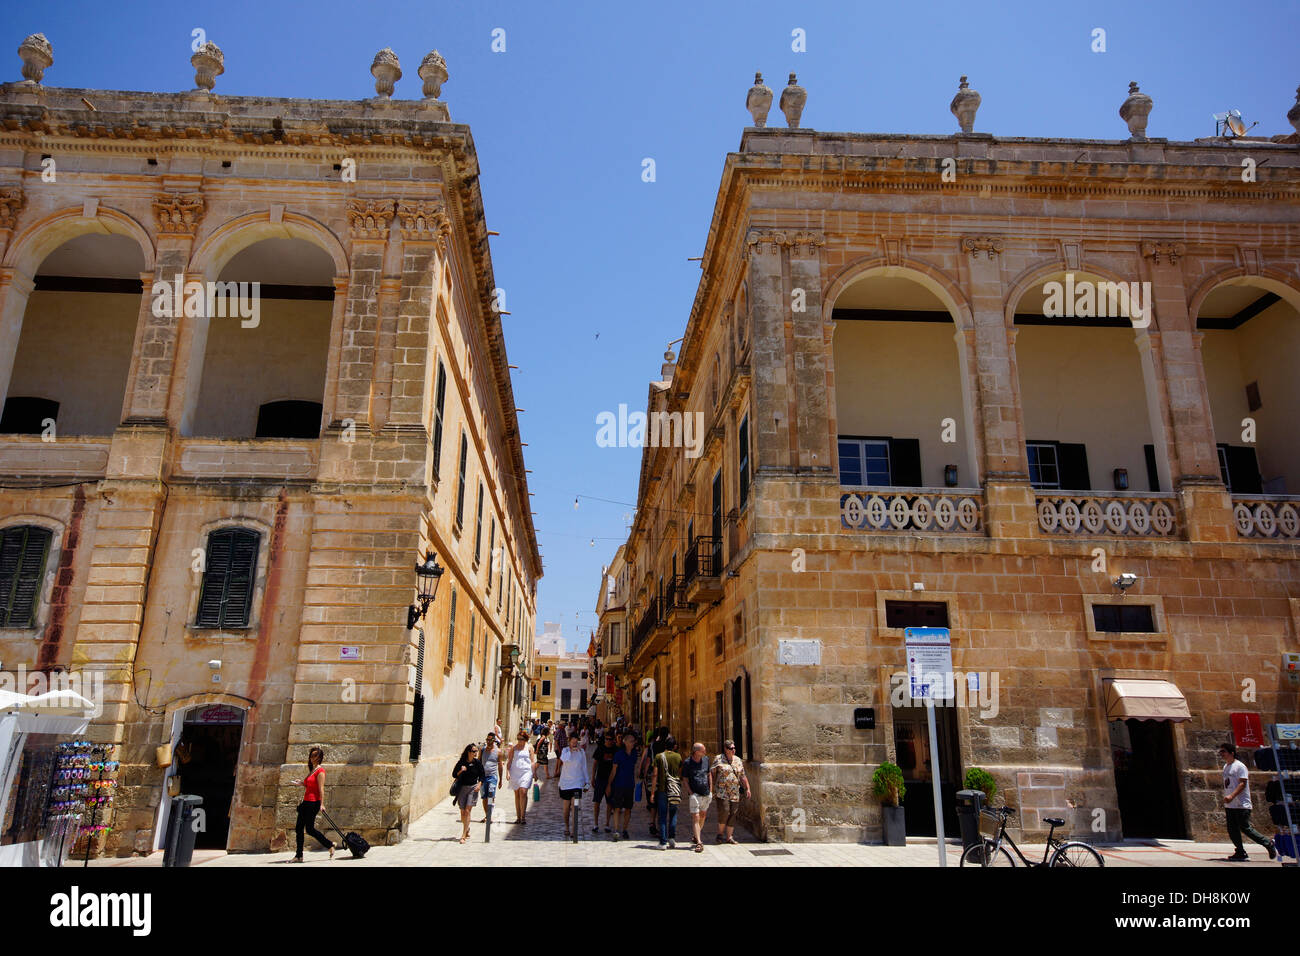 Placa des naissance, entrée à Cala Major, scène de rue, Ciutadella, Minorque, Espagne Banque D'Images